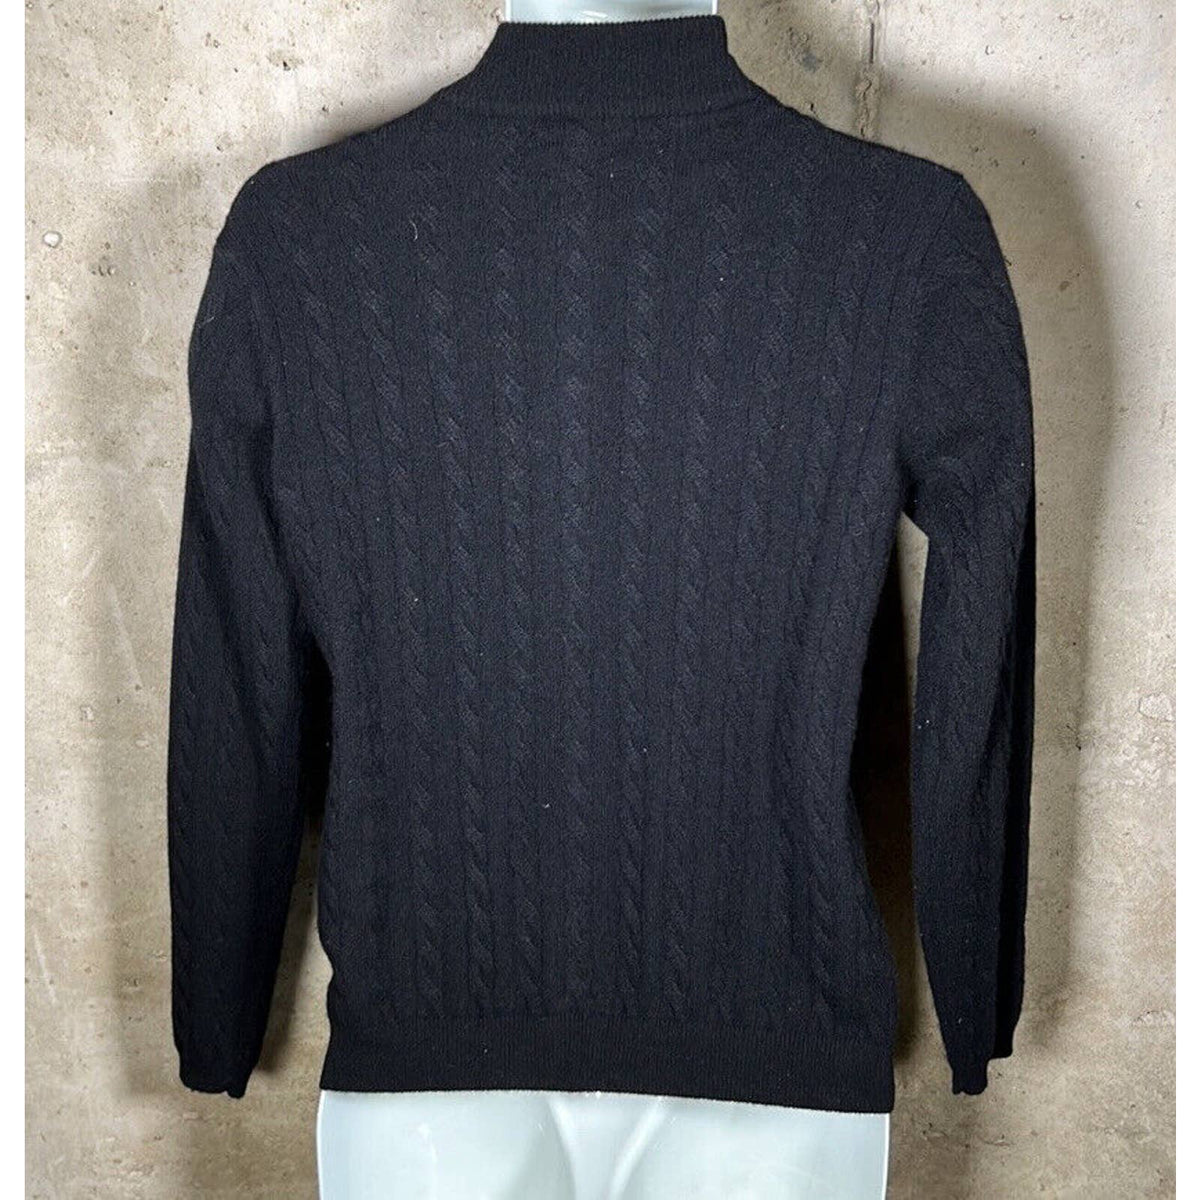 Peter Millar Black Knit 100% Cashmere Full Zip Sweater Sz. Large